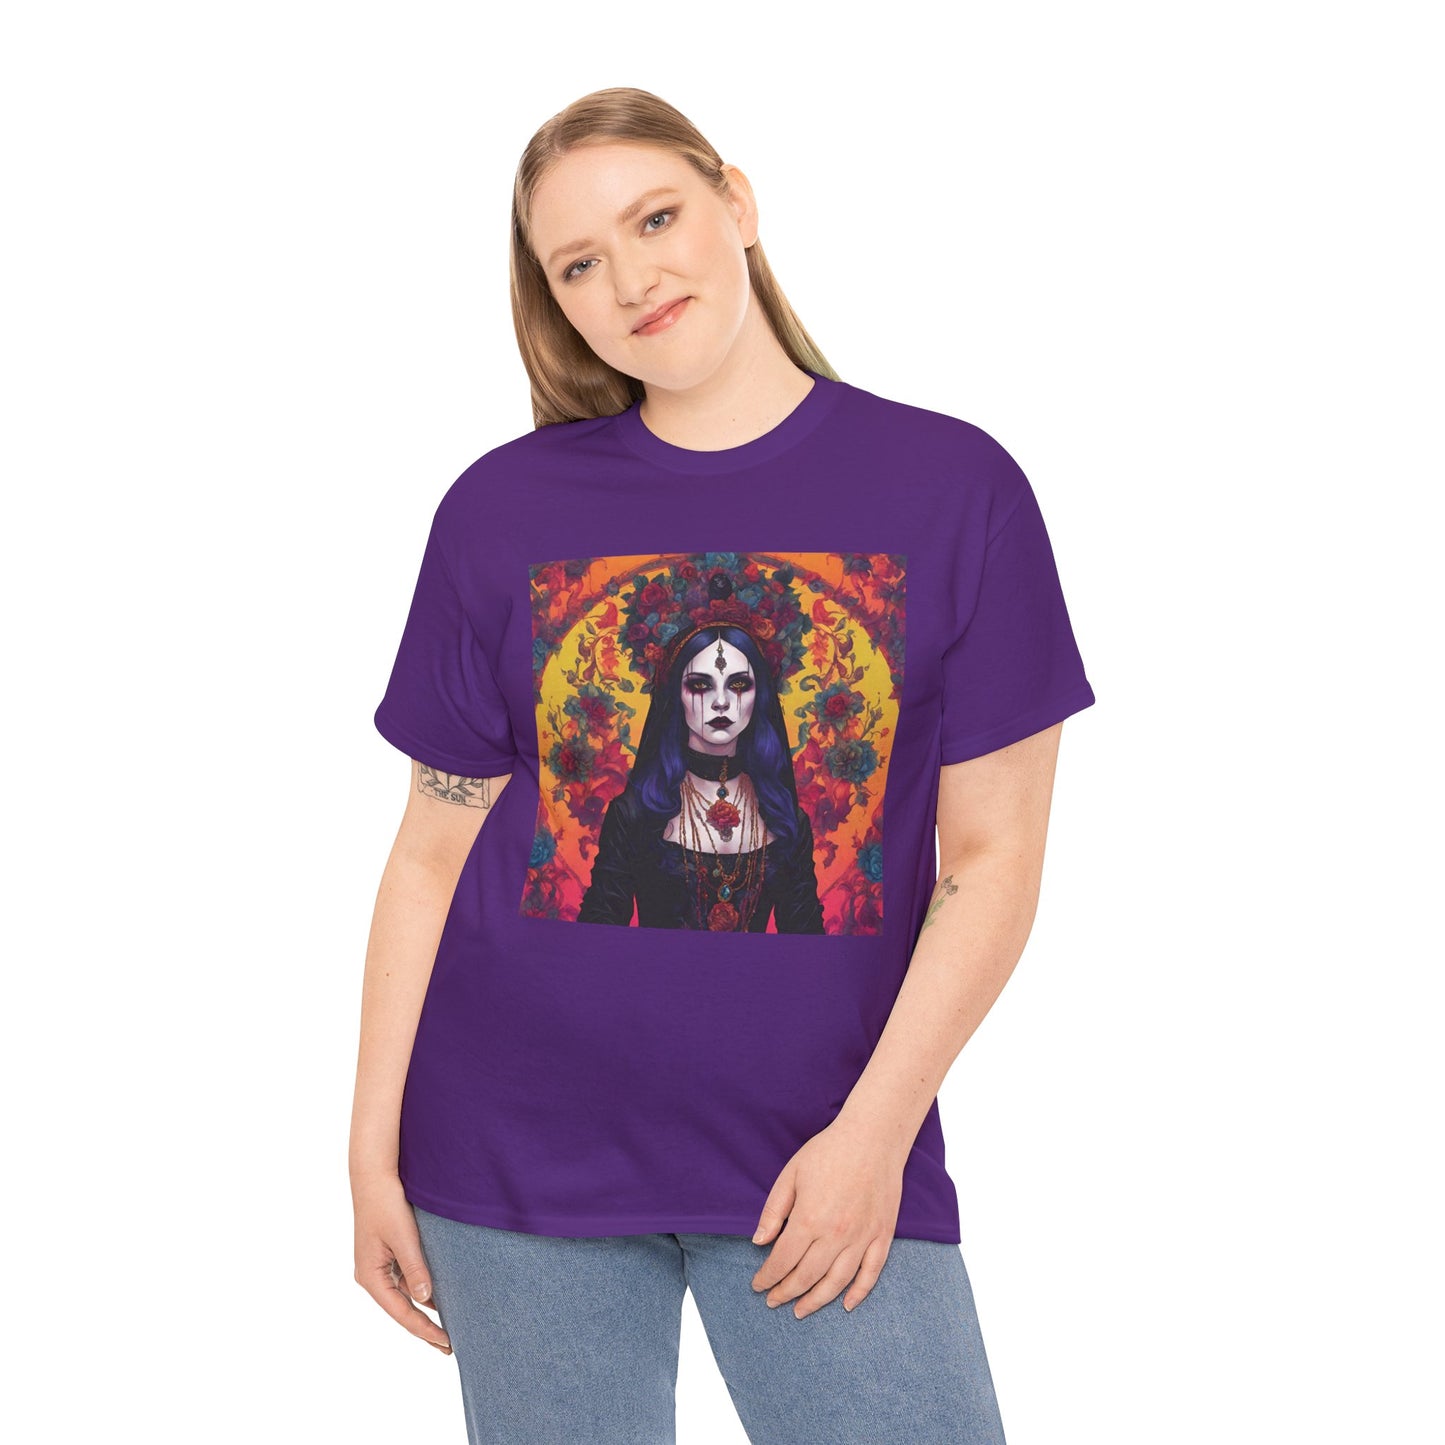 Goth Princess T-shirt